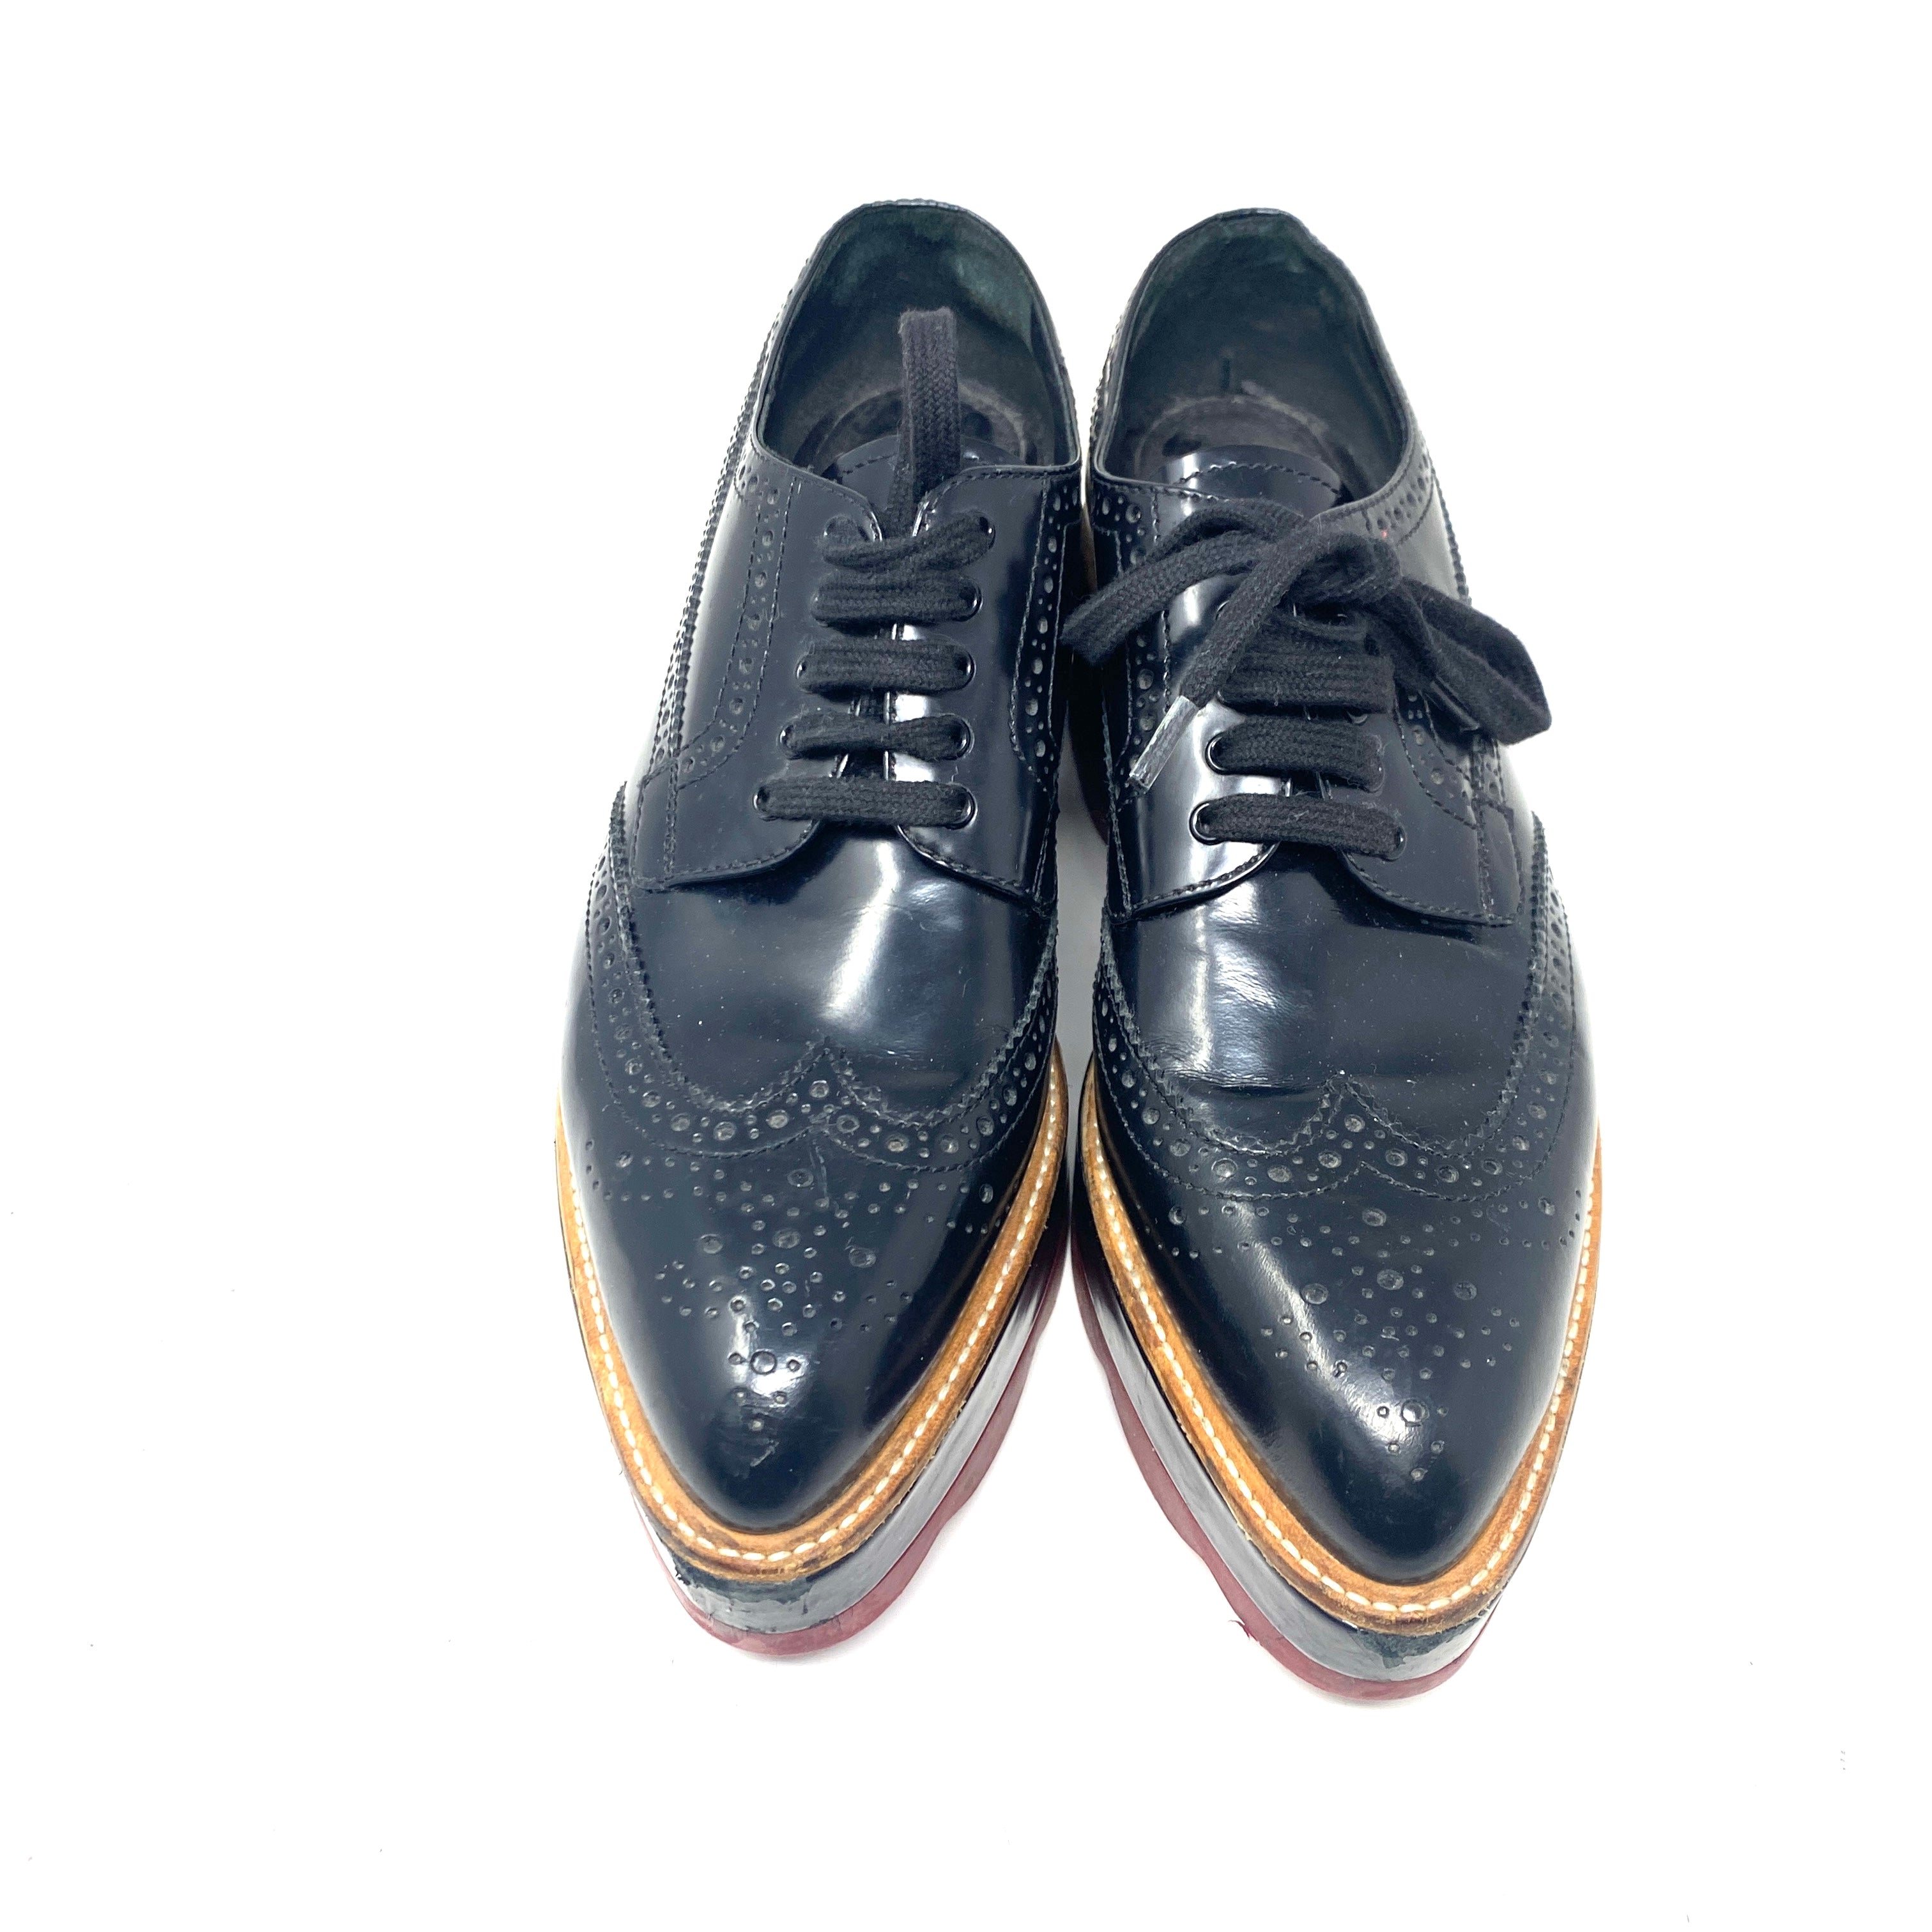 Zapatos Prada Oxford  – Sale Chop Chop